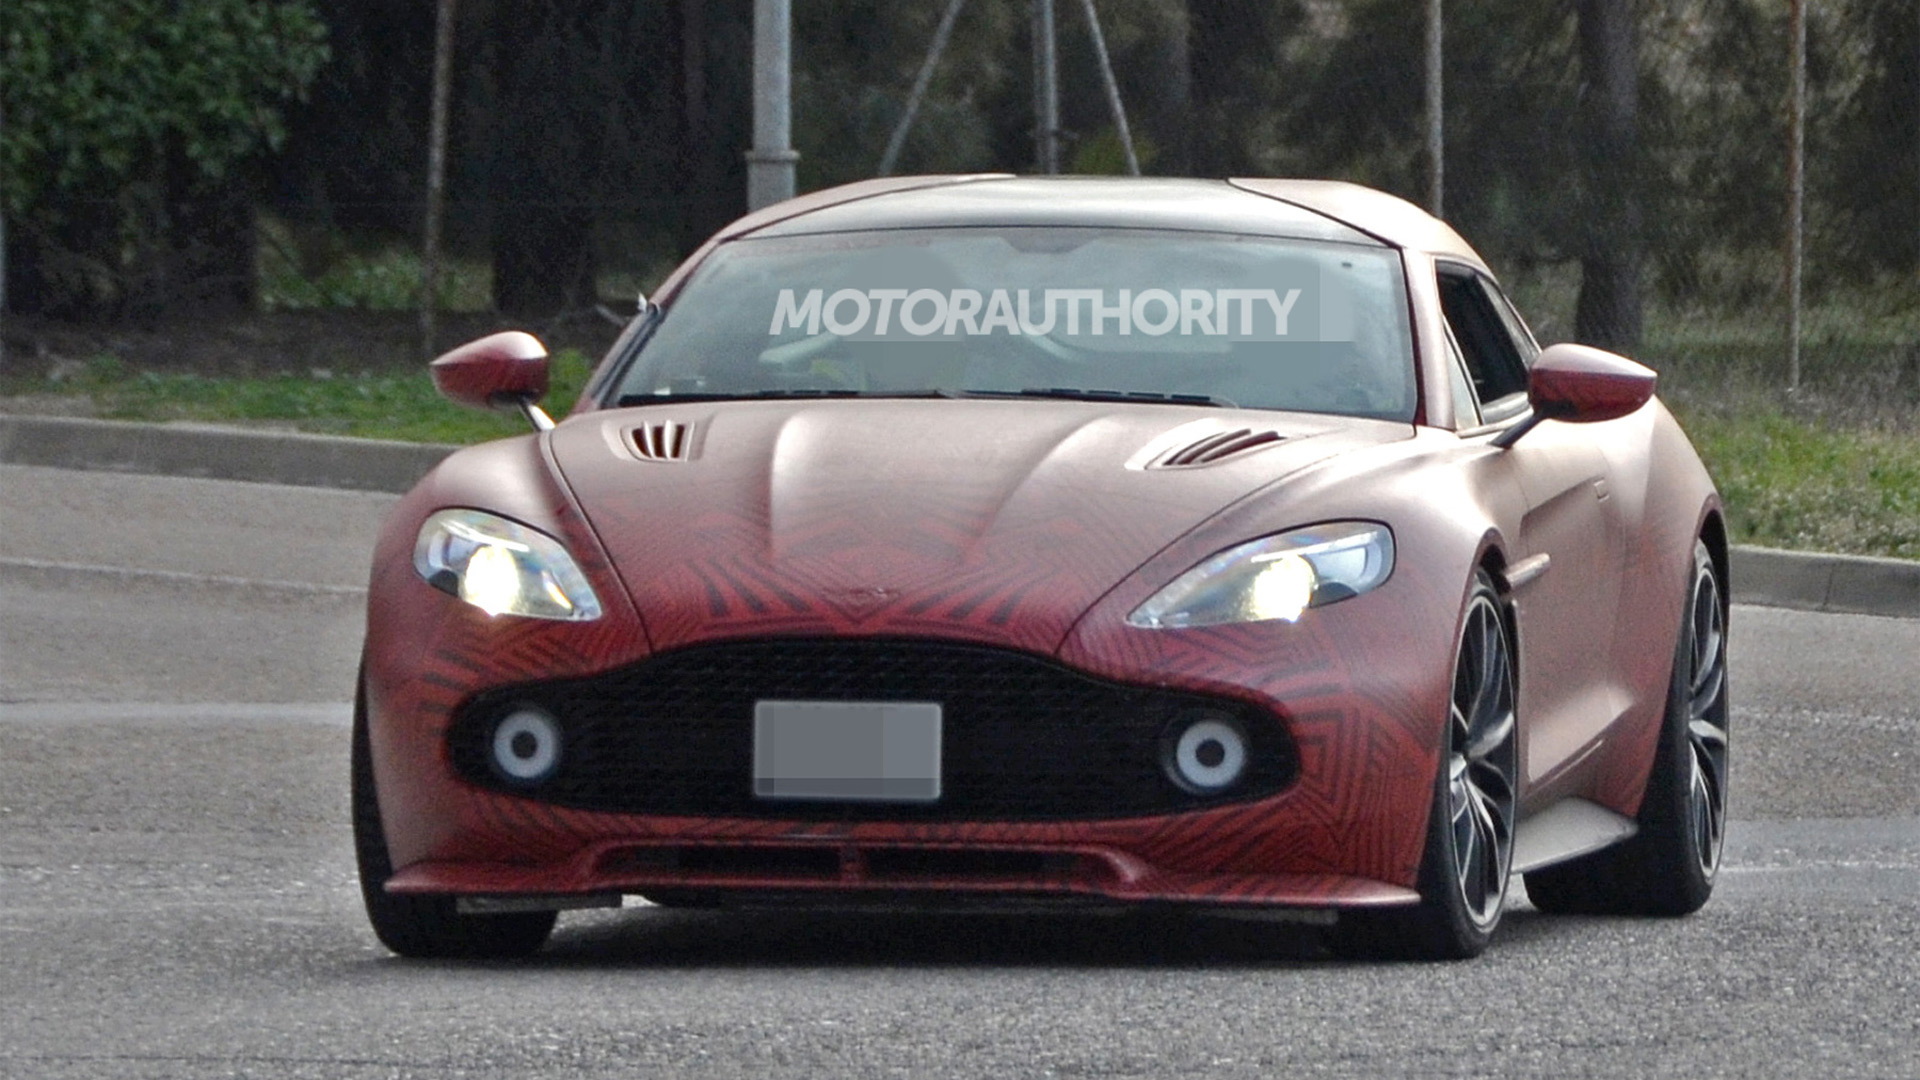 Aston Martin Vanquish Zagato Shooting Brake spy shots - Image via S. Baldauf/SB-Medien